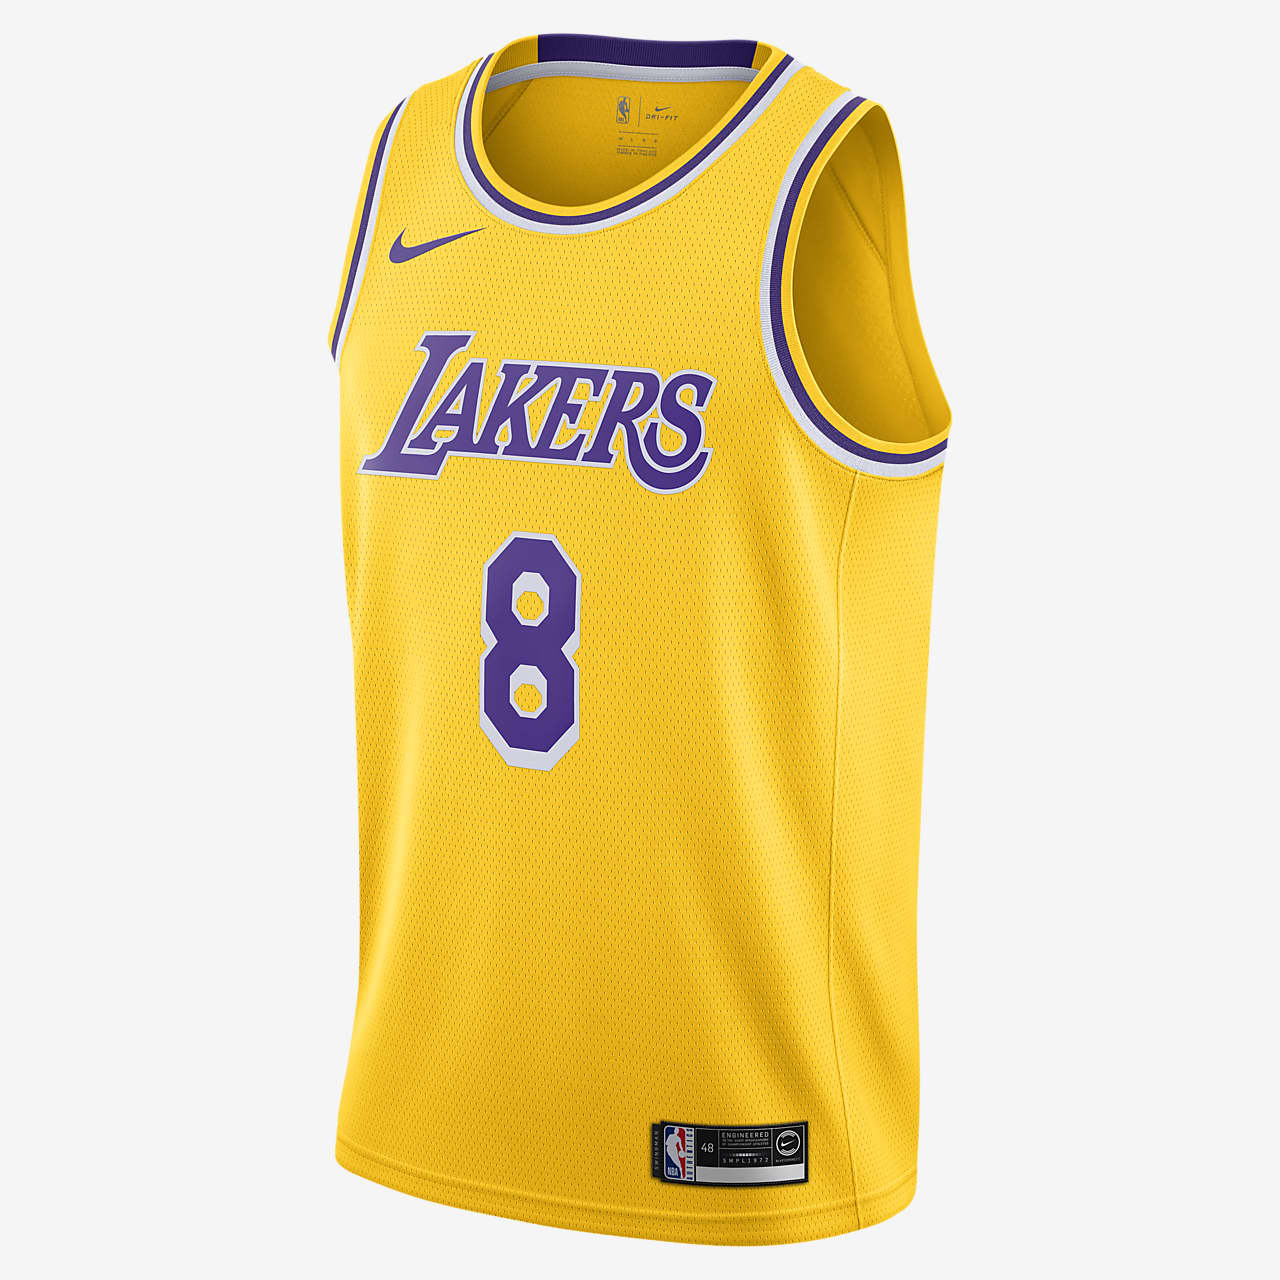 洛杉矶湖人队 (Kobe Bryant) Icon Edition Nike NBA Swingman Jersey 男子球衣